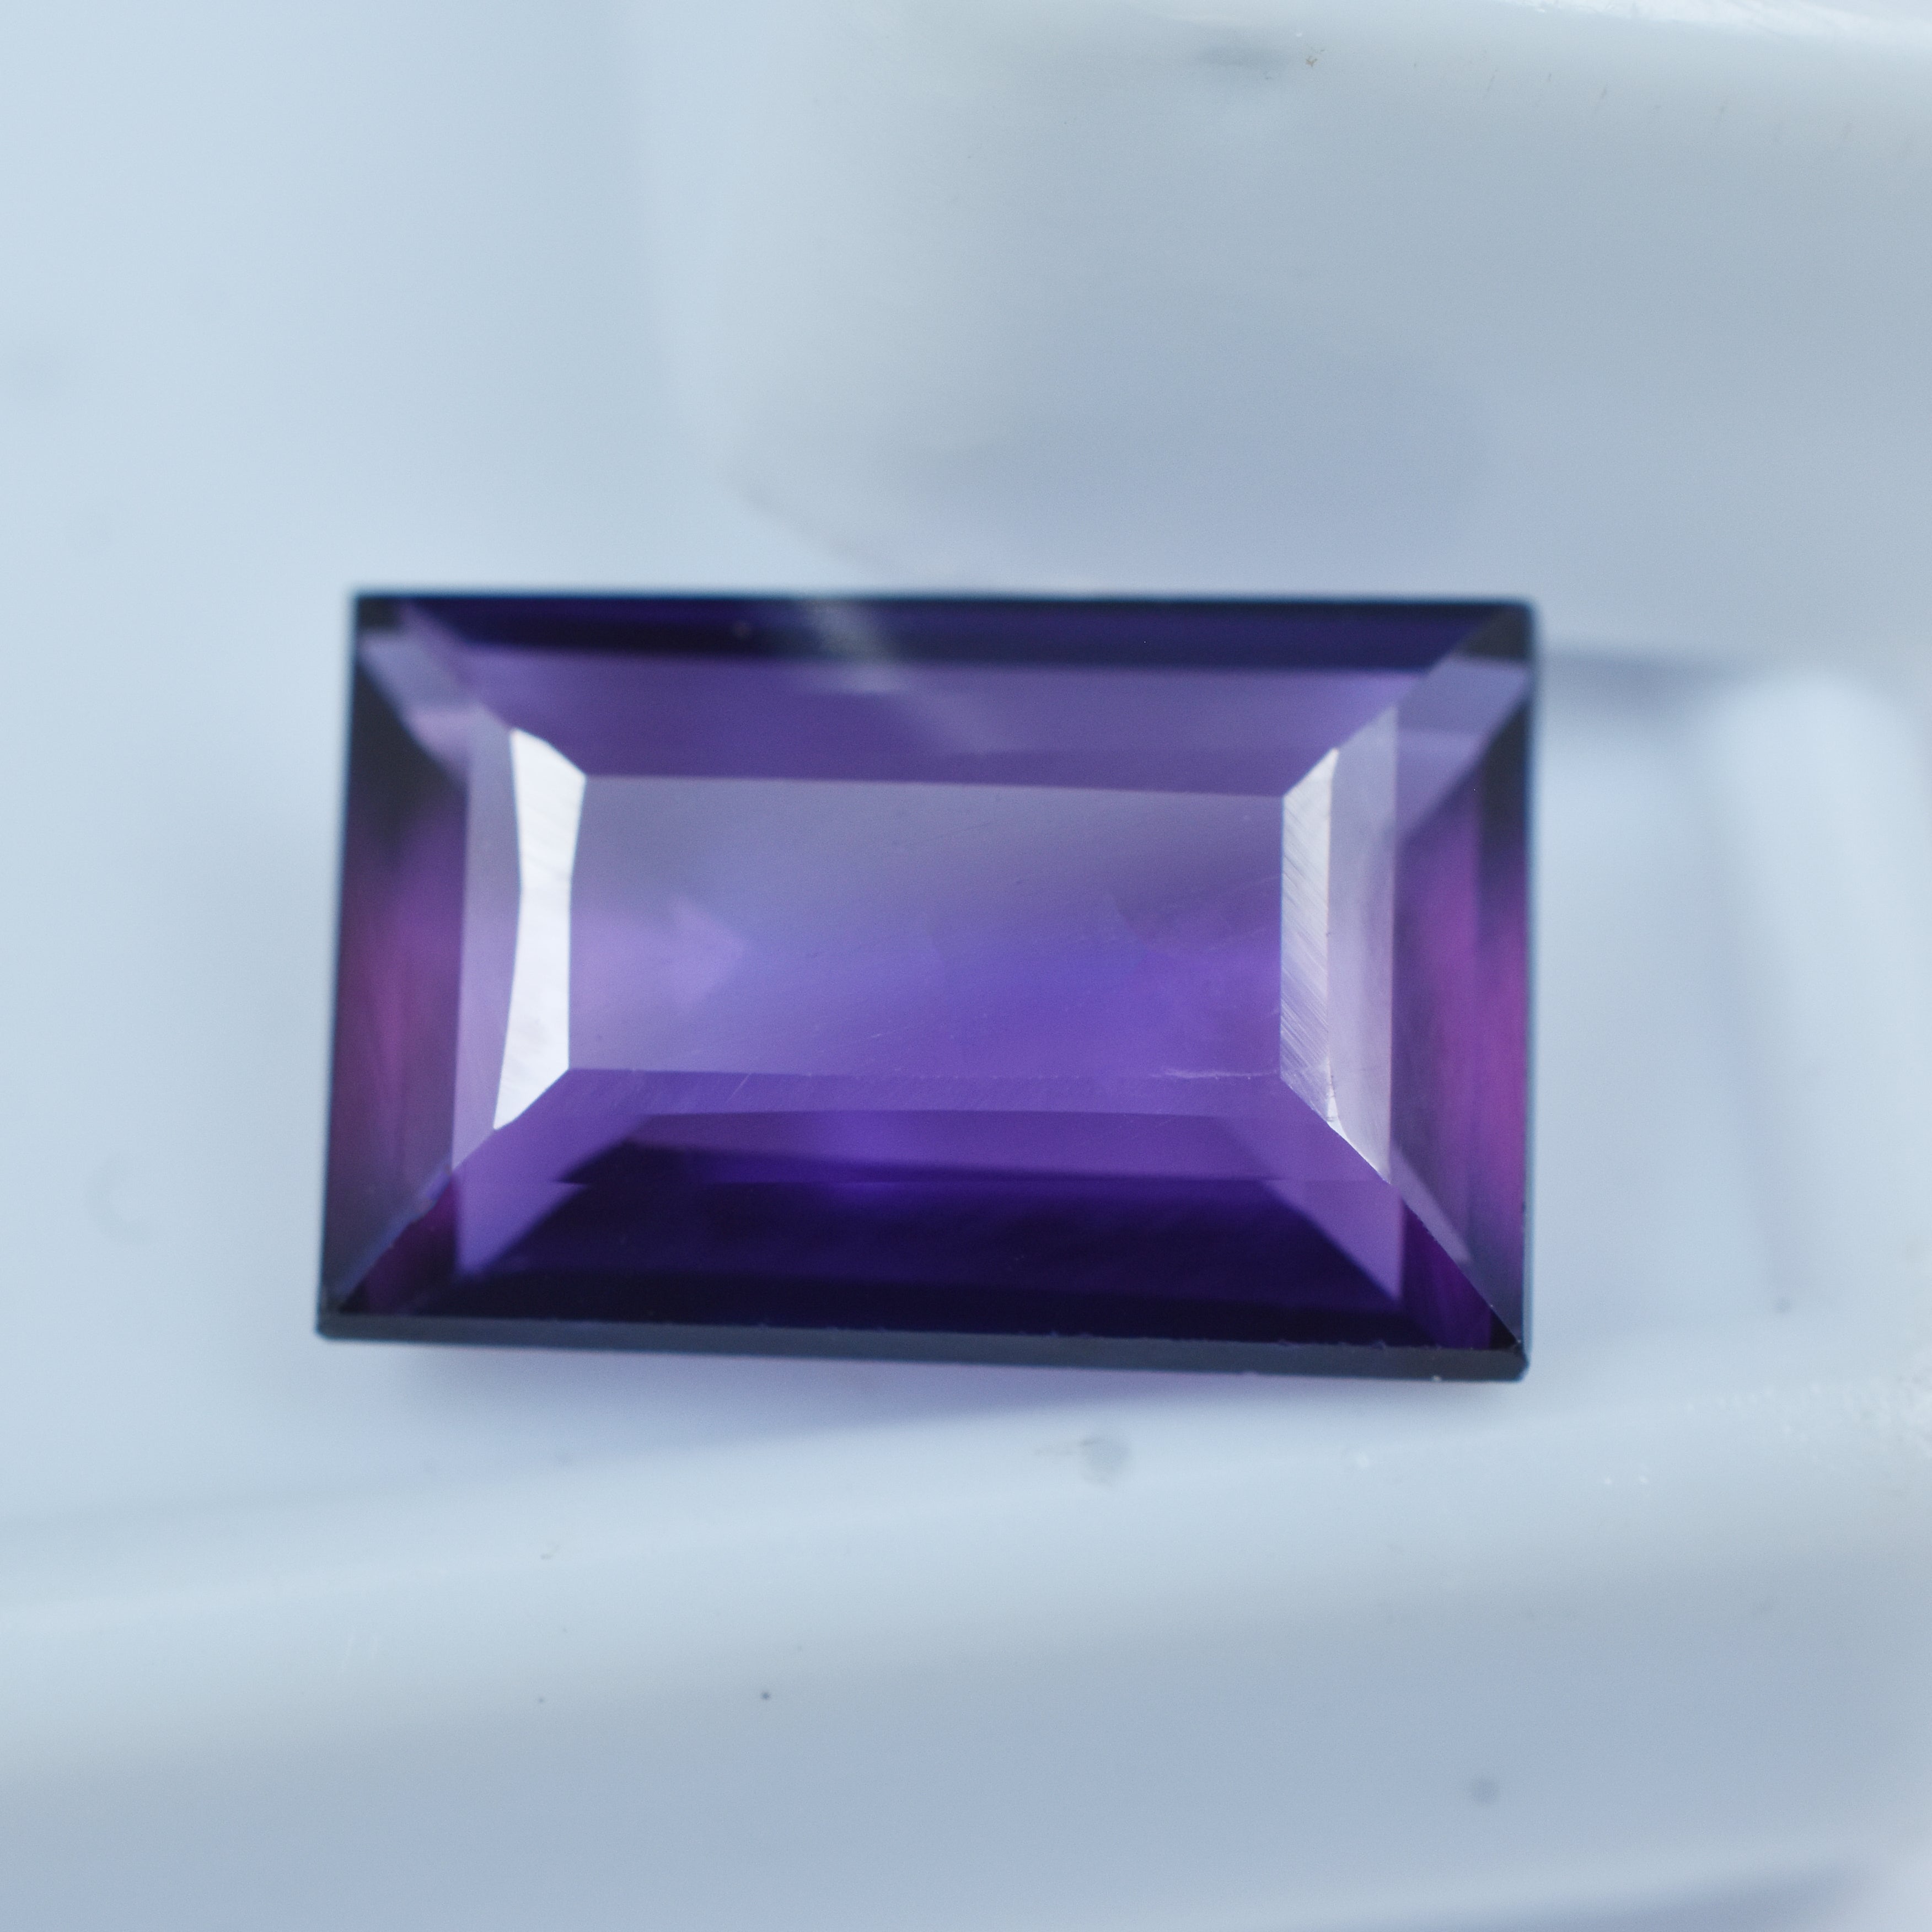 Beautiful Tanzania's Natural Purple Tanzanite Gemstone Just For Your Protection 6.45 Carat Emerald Shape Certified Loose Gemstone Purple Tanzanite Gem